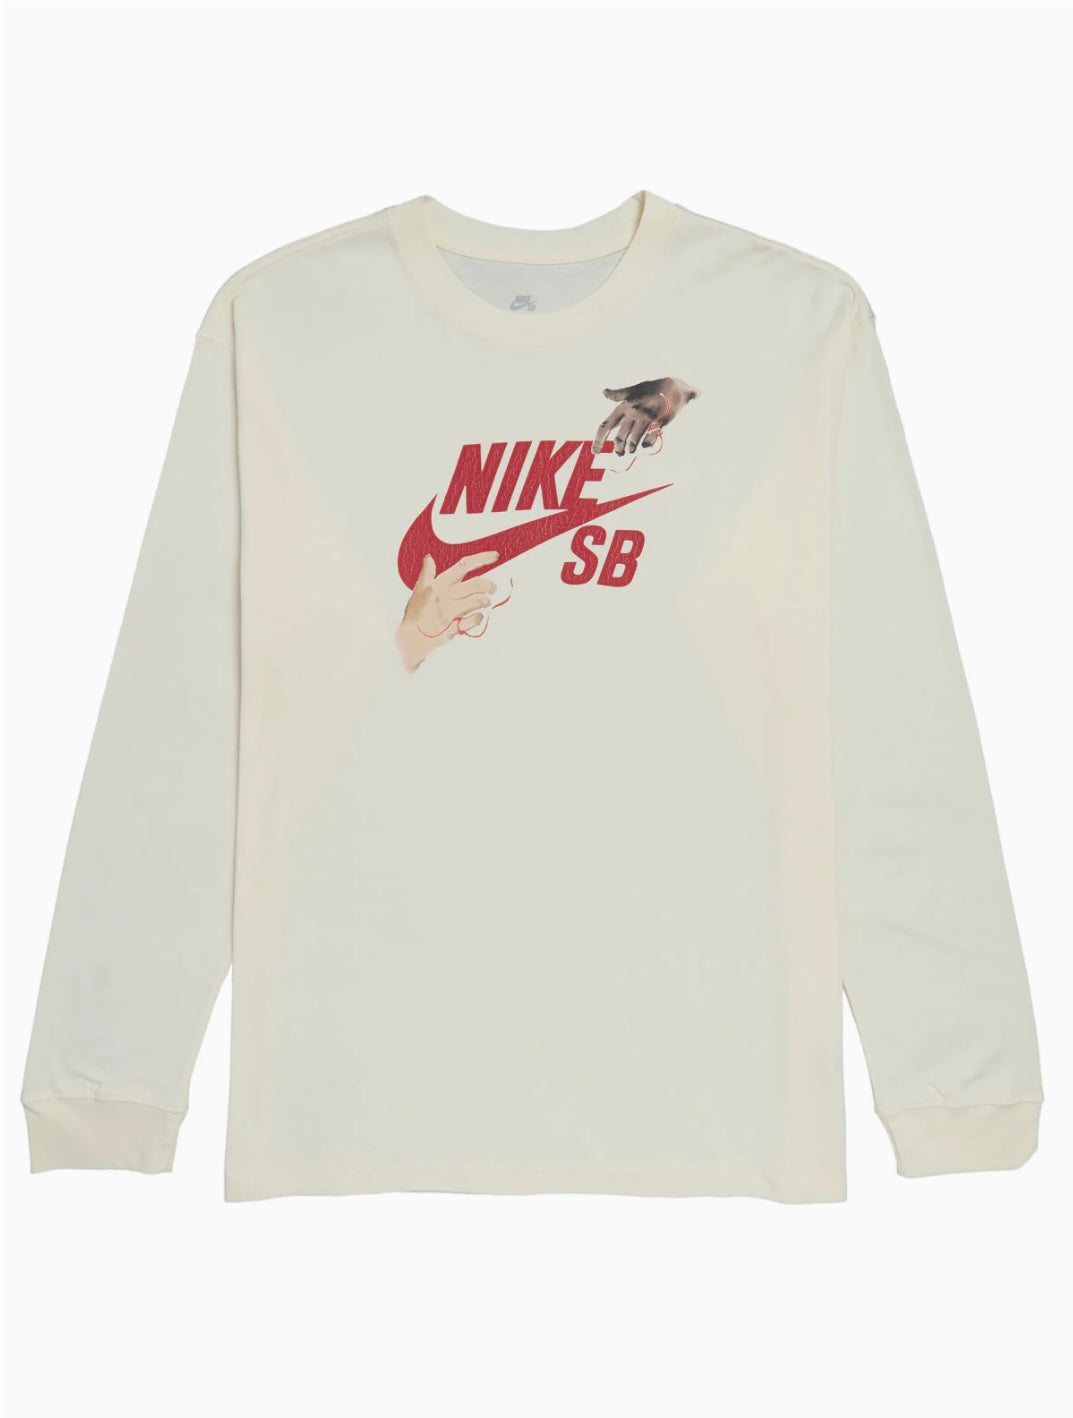 Nike Sb Tee Shirt